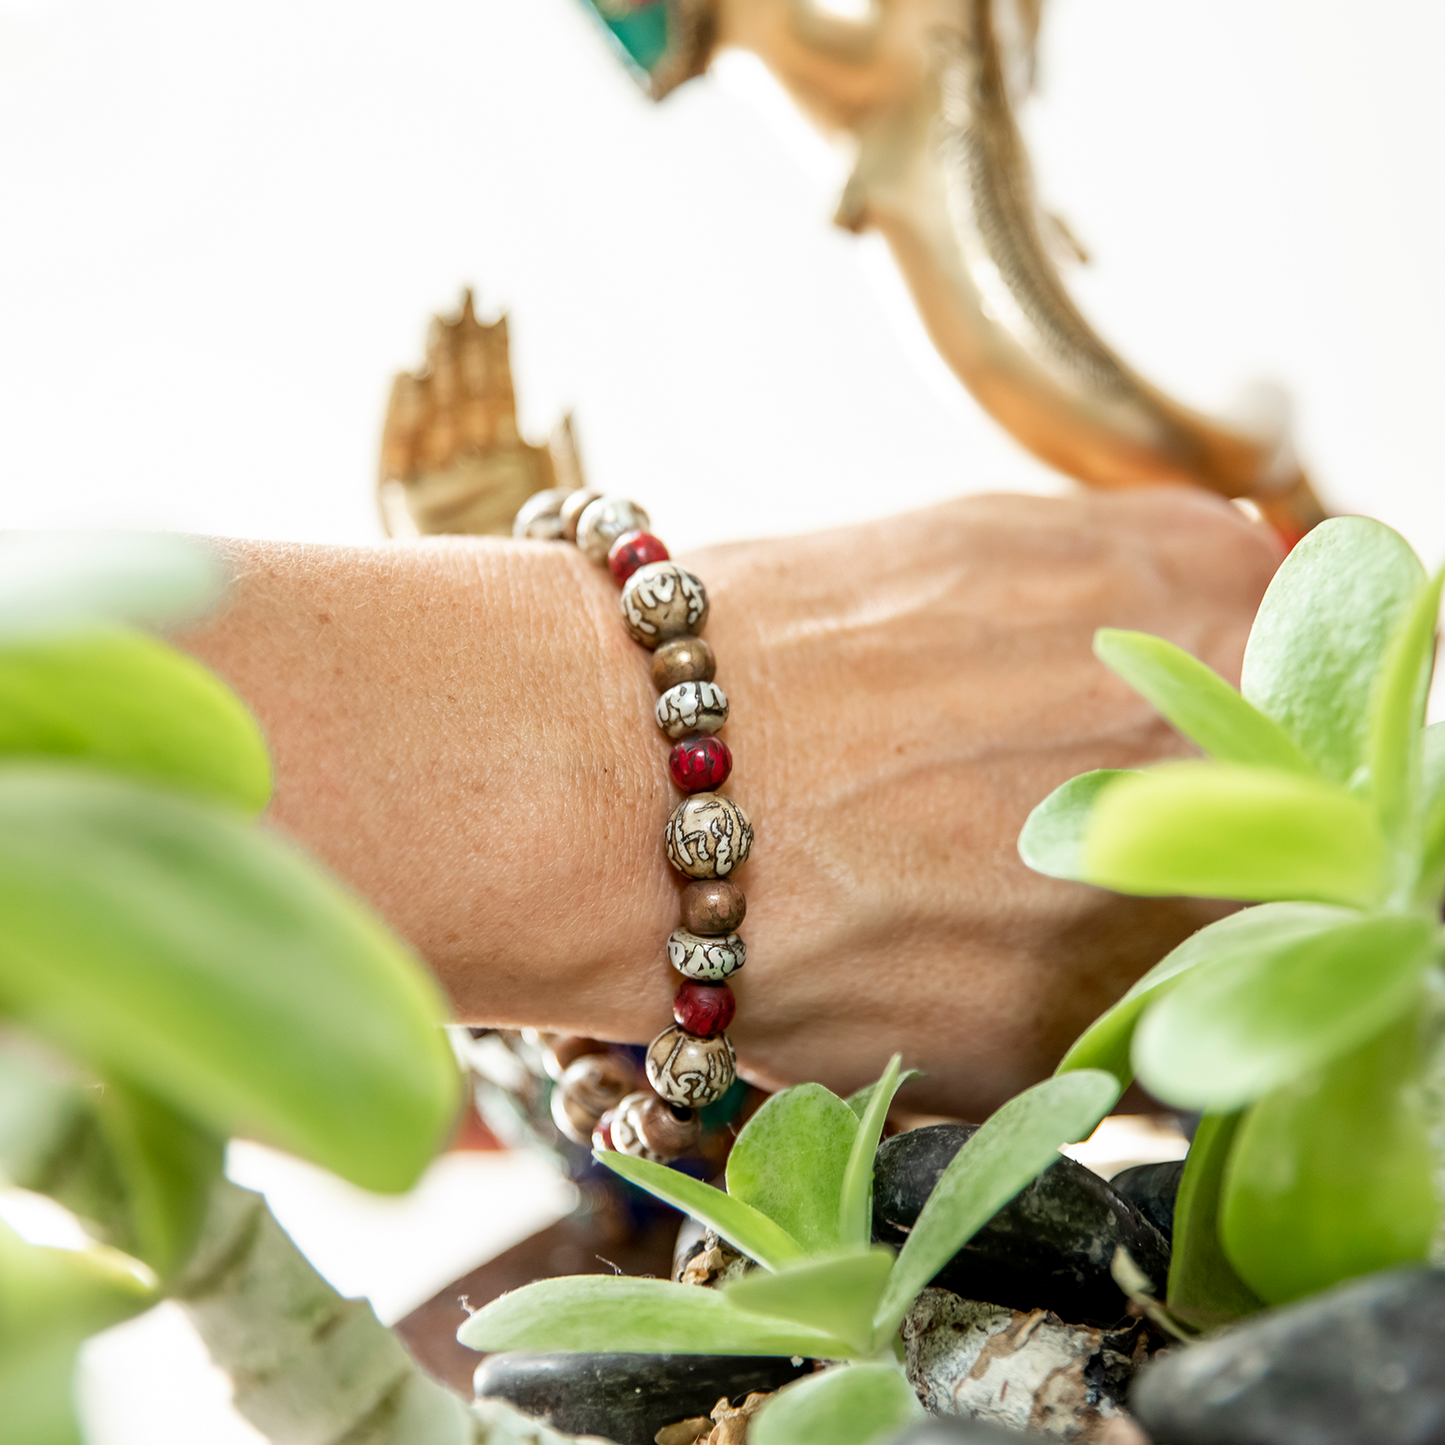 Close-up of woman's wrist reaching into planter wearing Hermit Healing Bracelet.